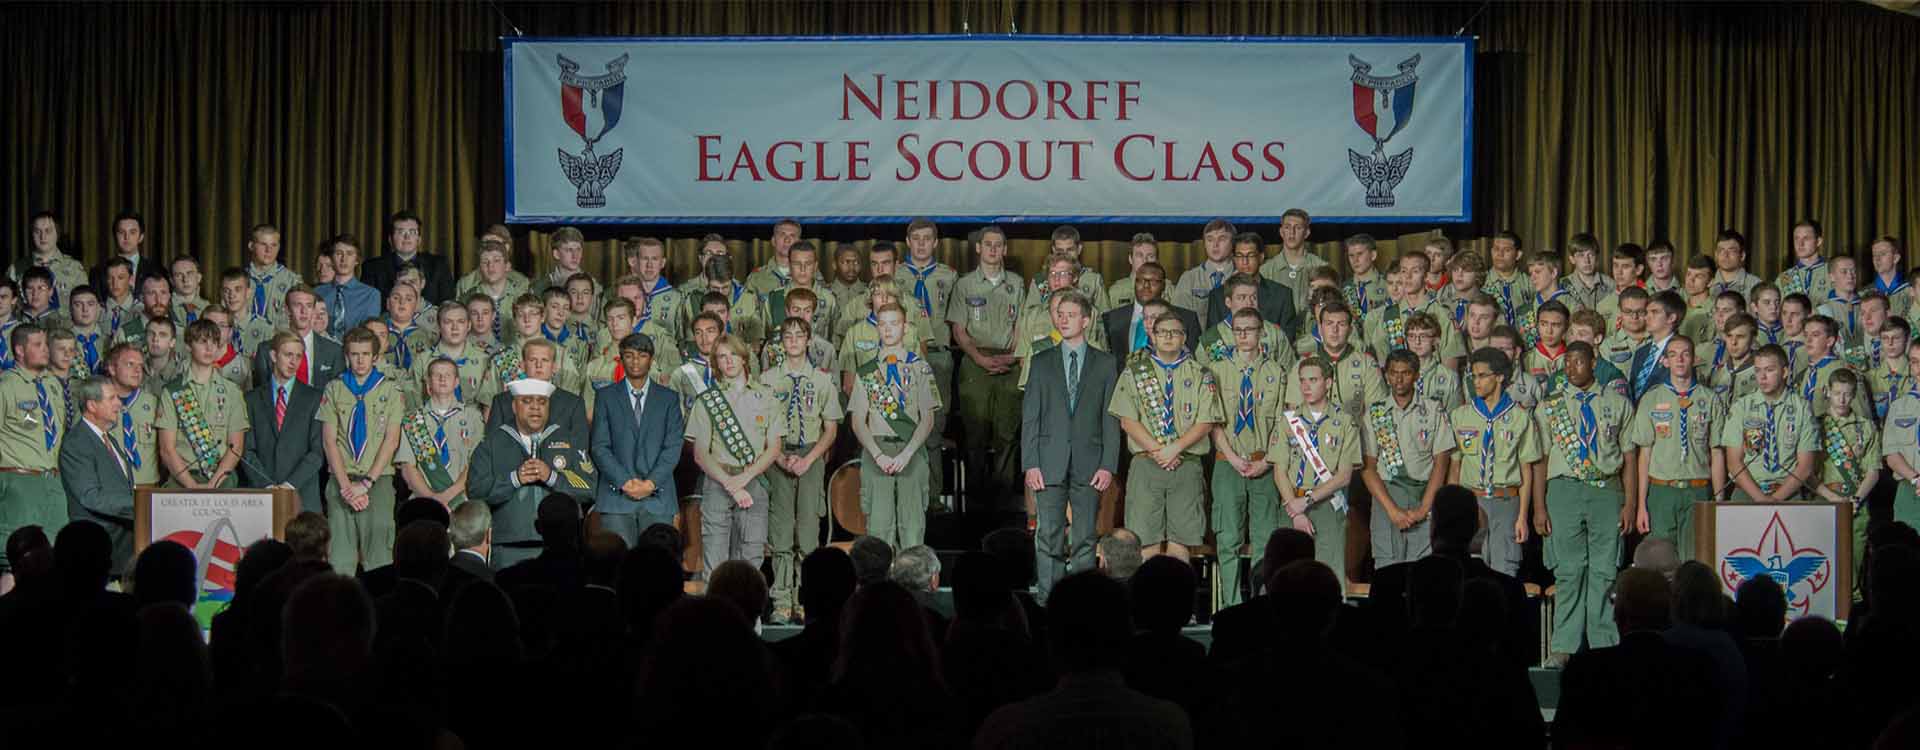 2015 Neidorff Class of Eagle Scouts